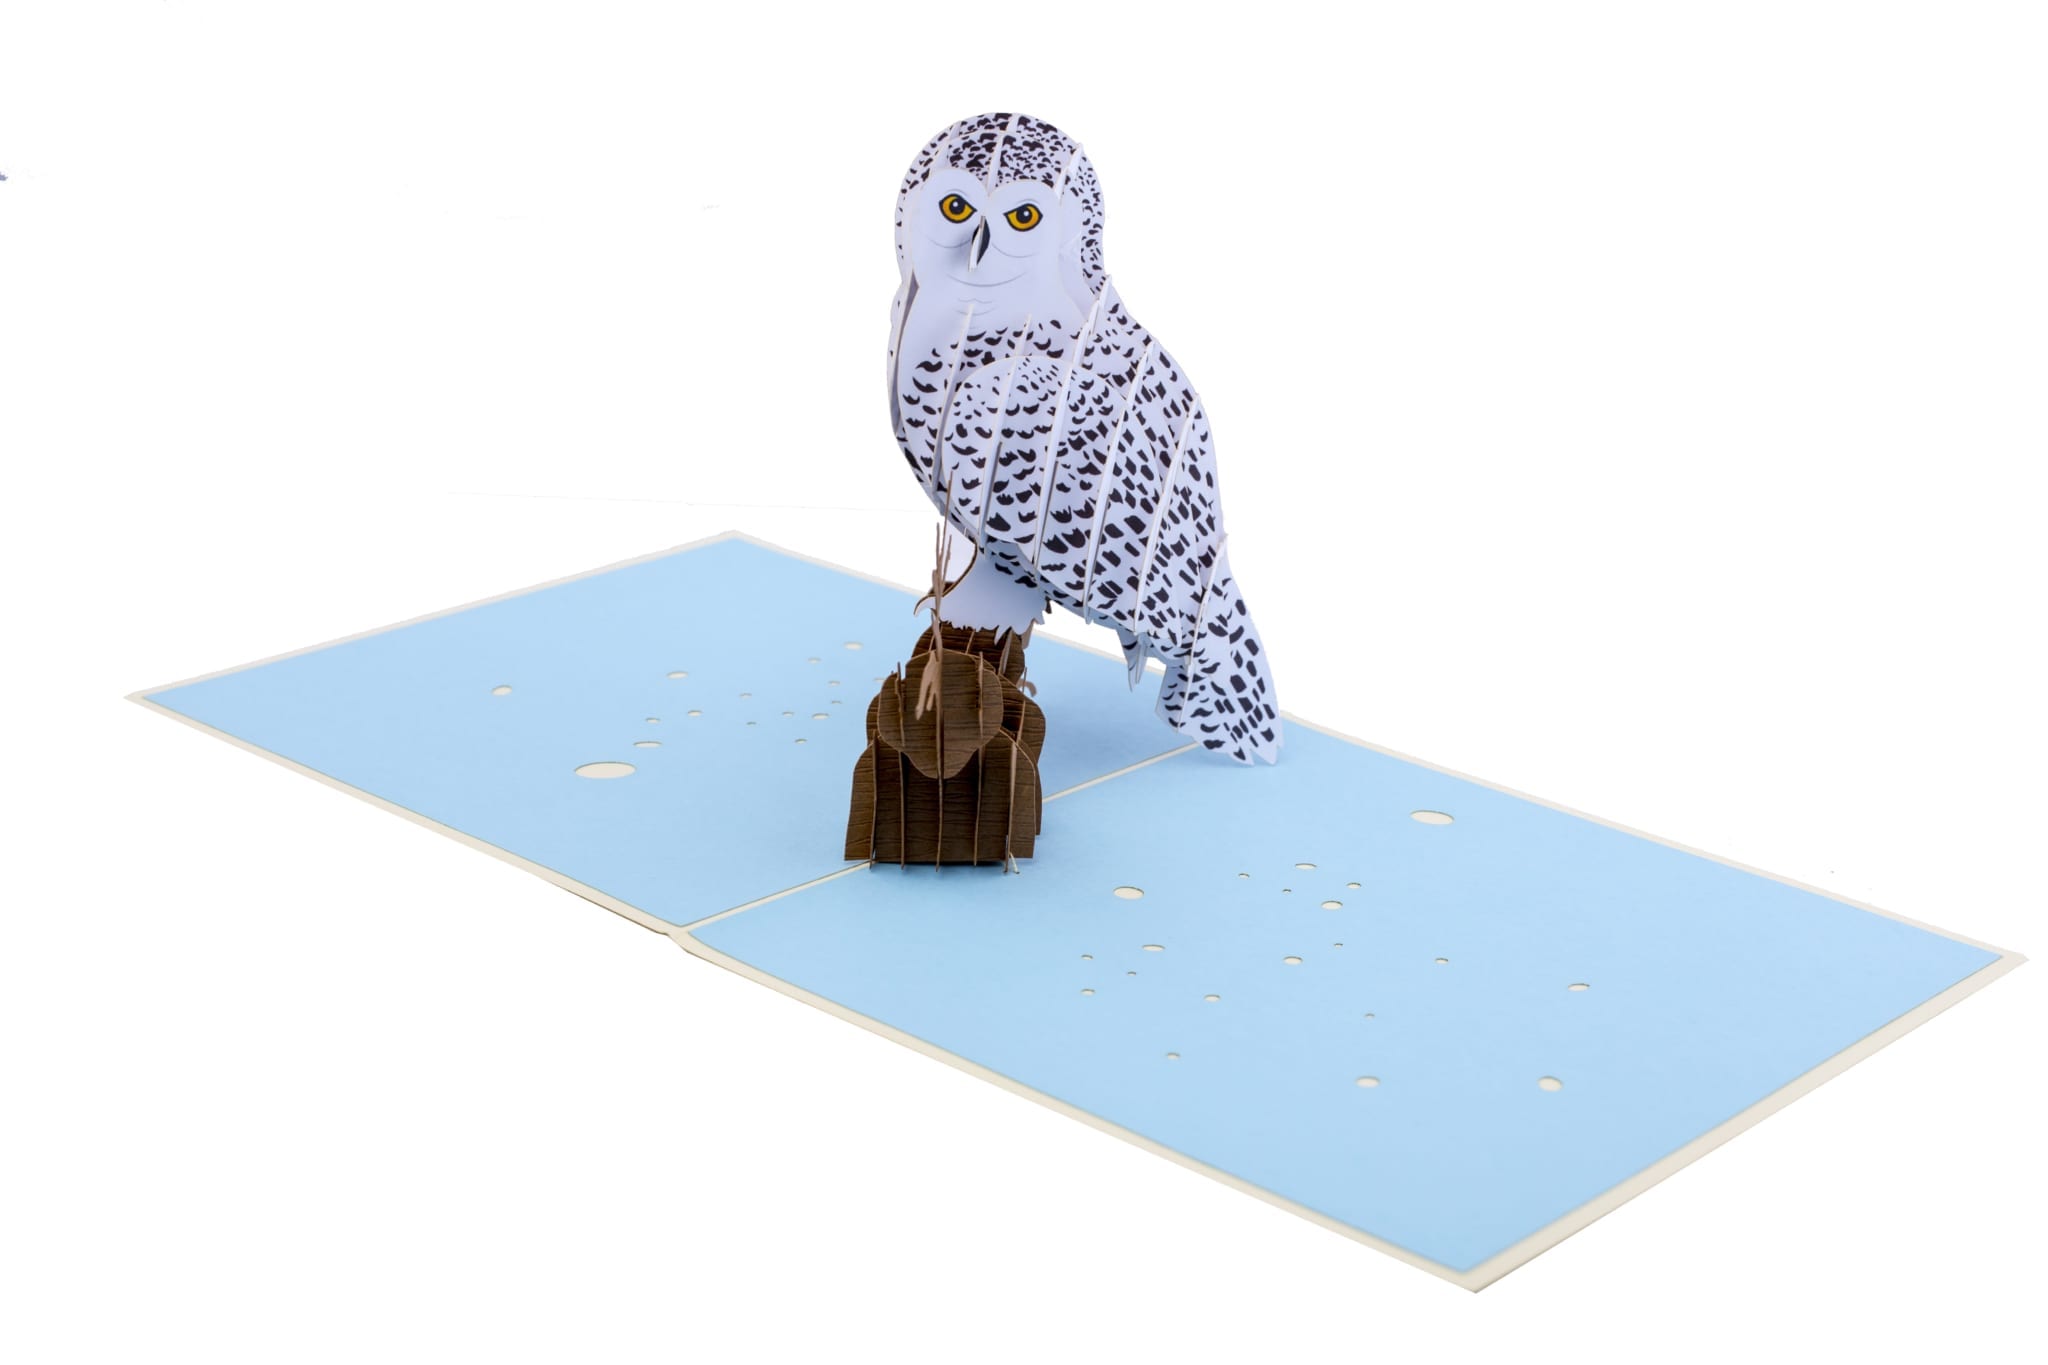 Japanese Snowy Owl pop up card open